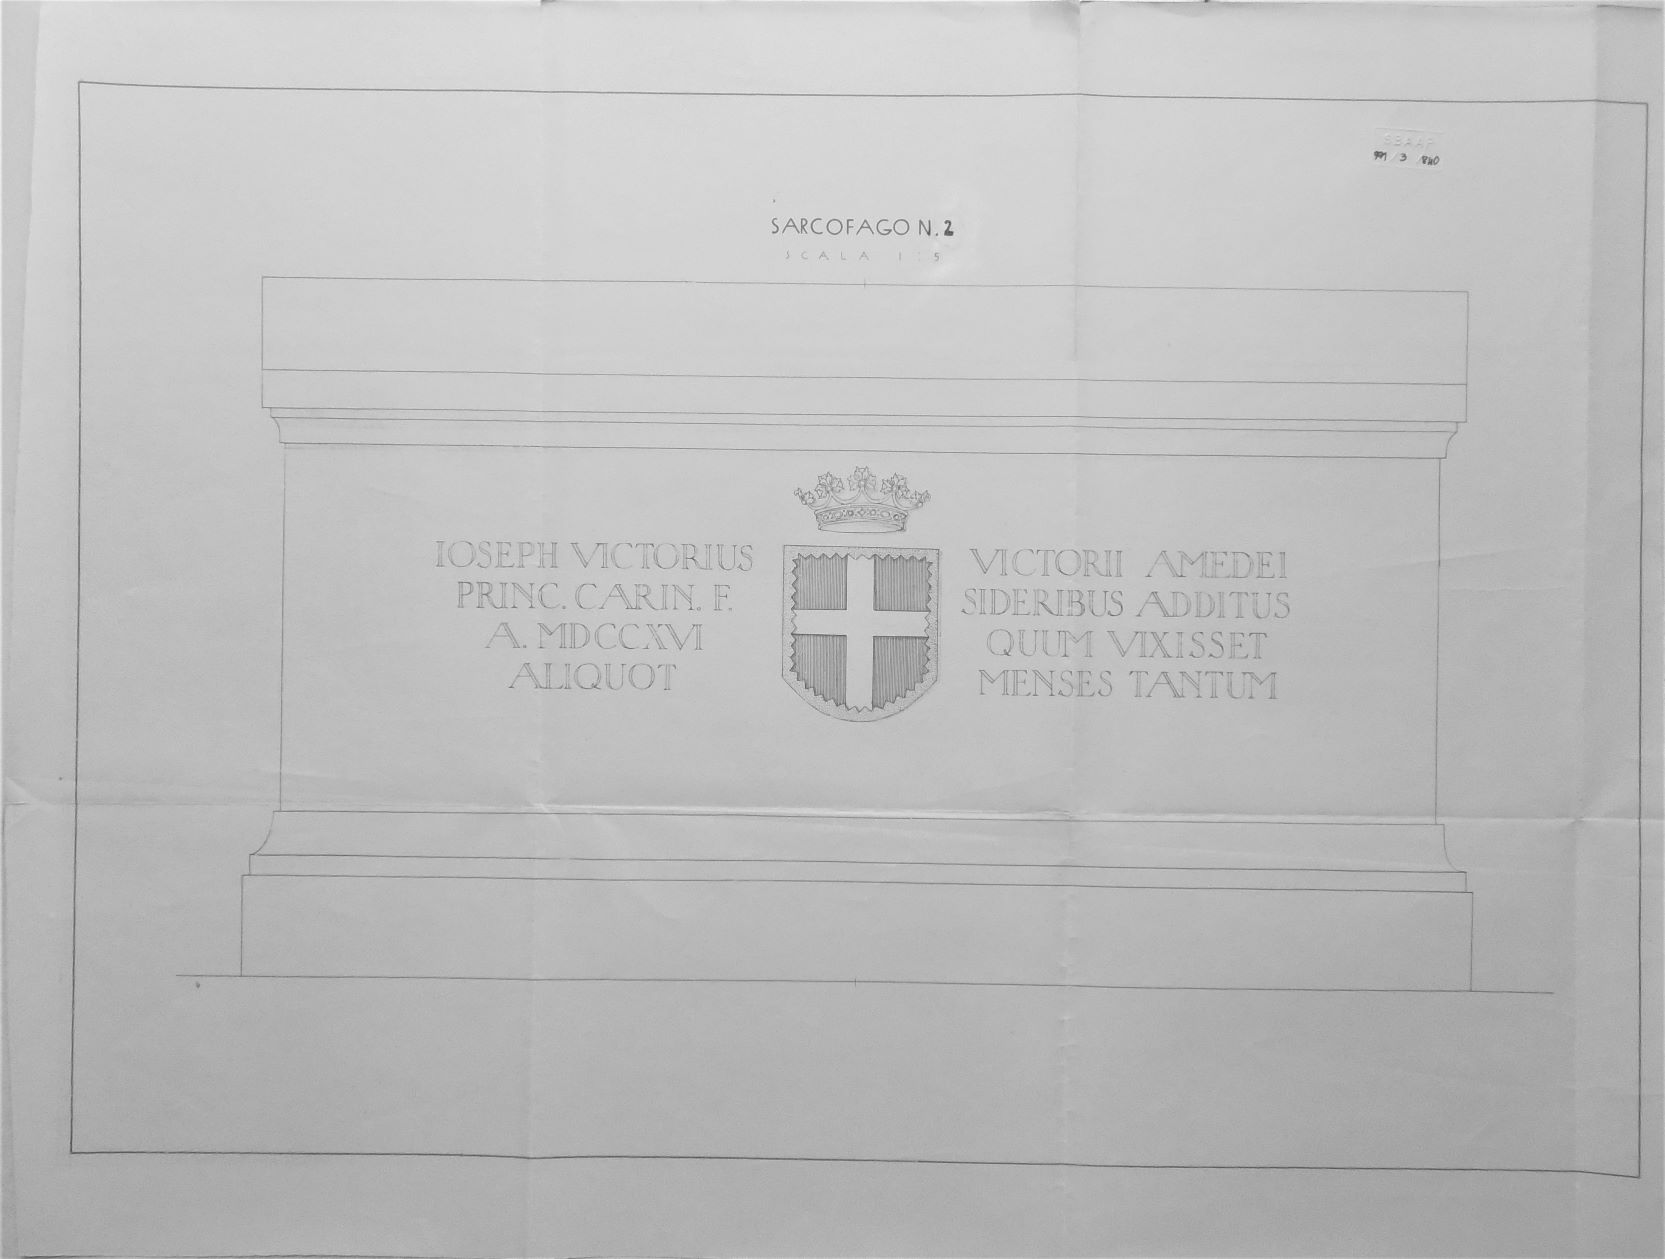 Sacra di San Michele/ Sarcofago n. 2 - scala 1:5, Sacra di San Michele a Sant'Ambrogio di Susa (TO) - Sarcofago n. 2 - scala 1:5 (disegno) di Chierici Umberto (cerchia) (secondo quarto sec. XX)